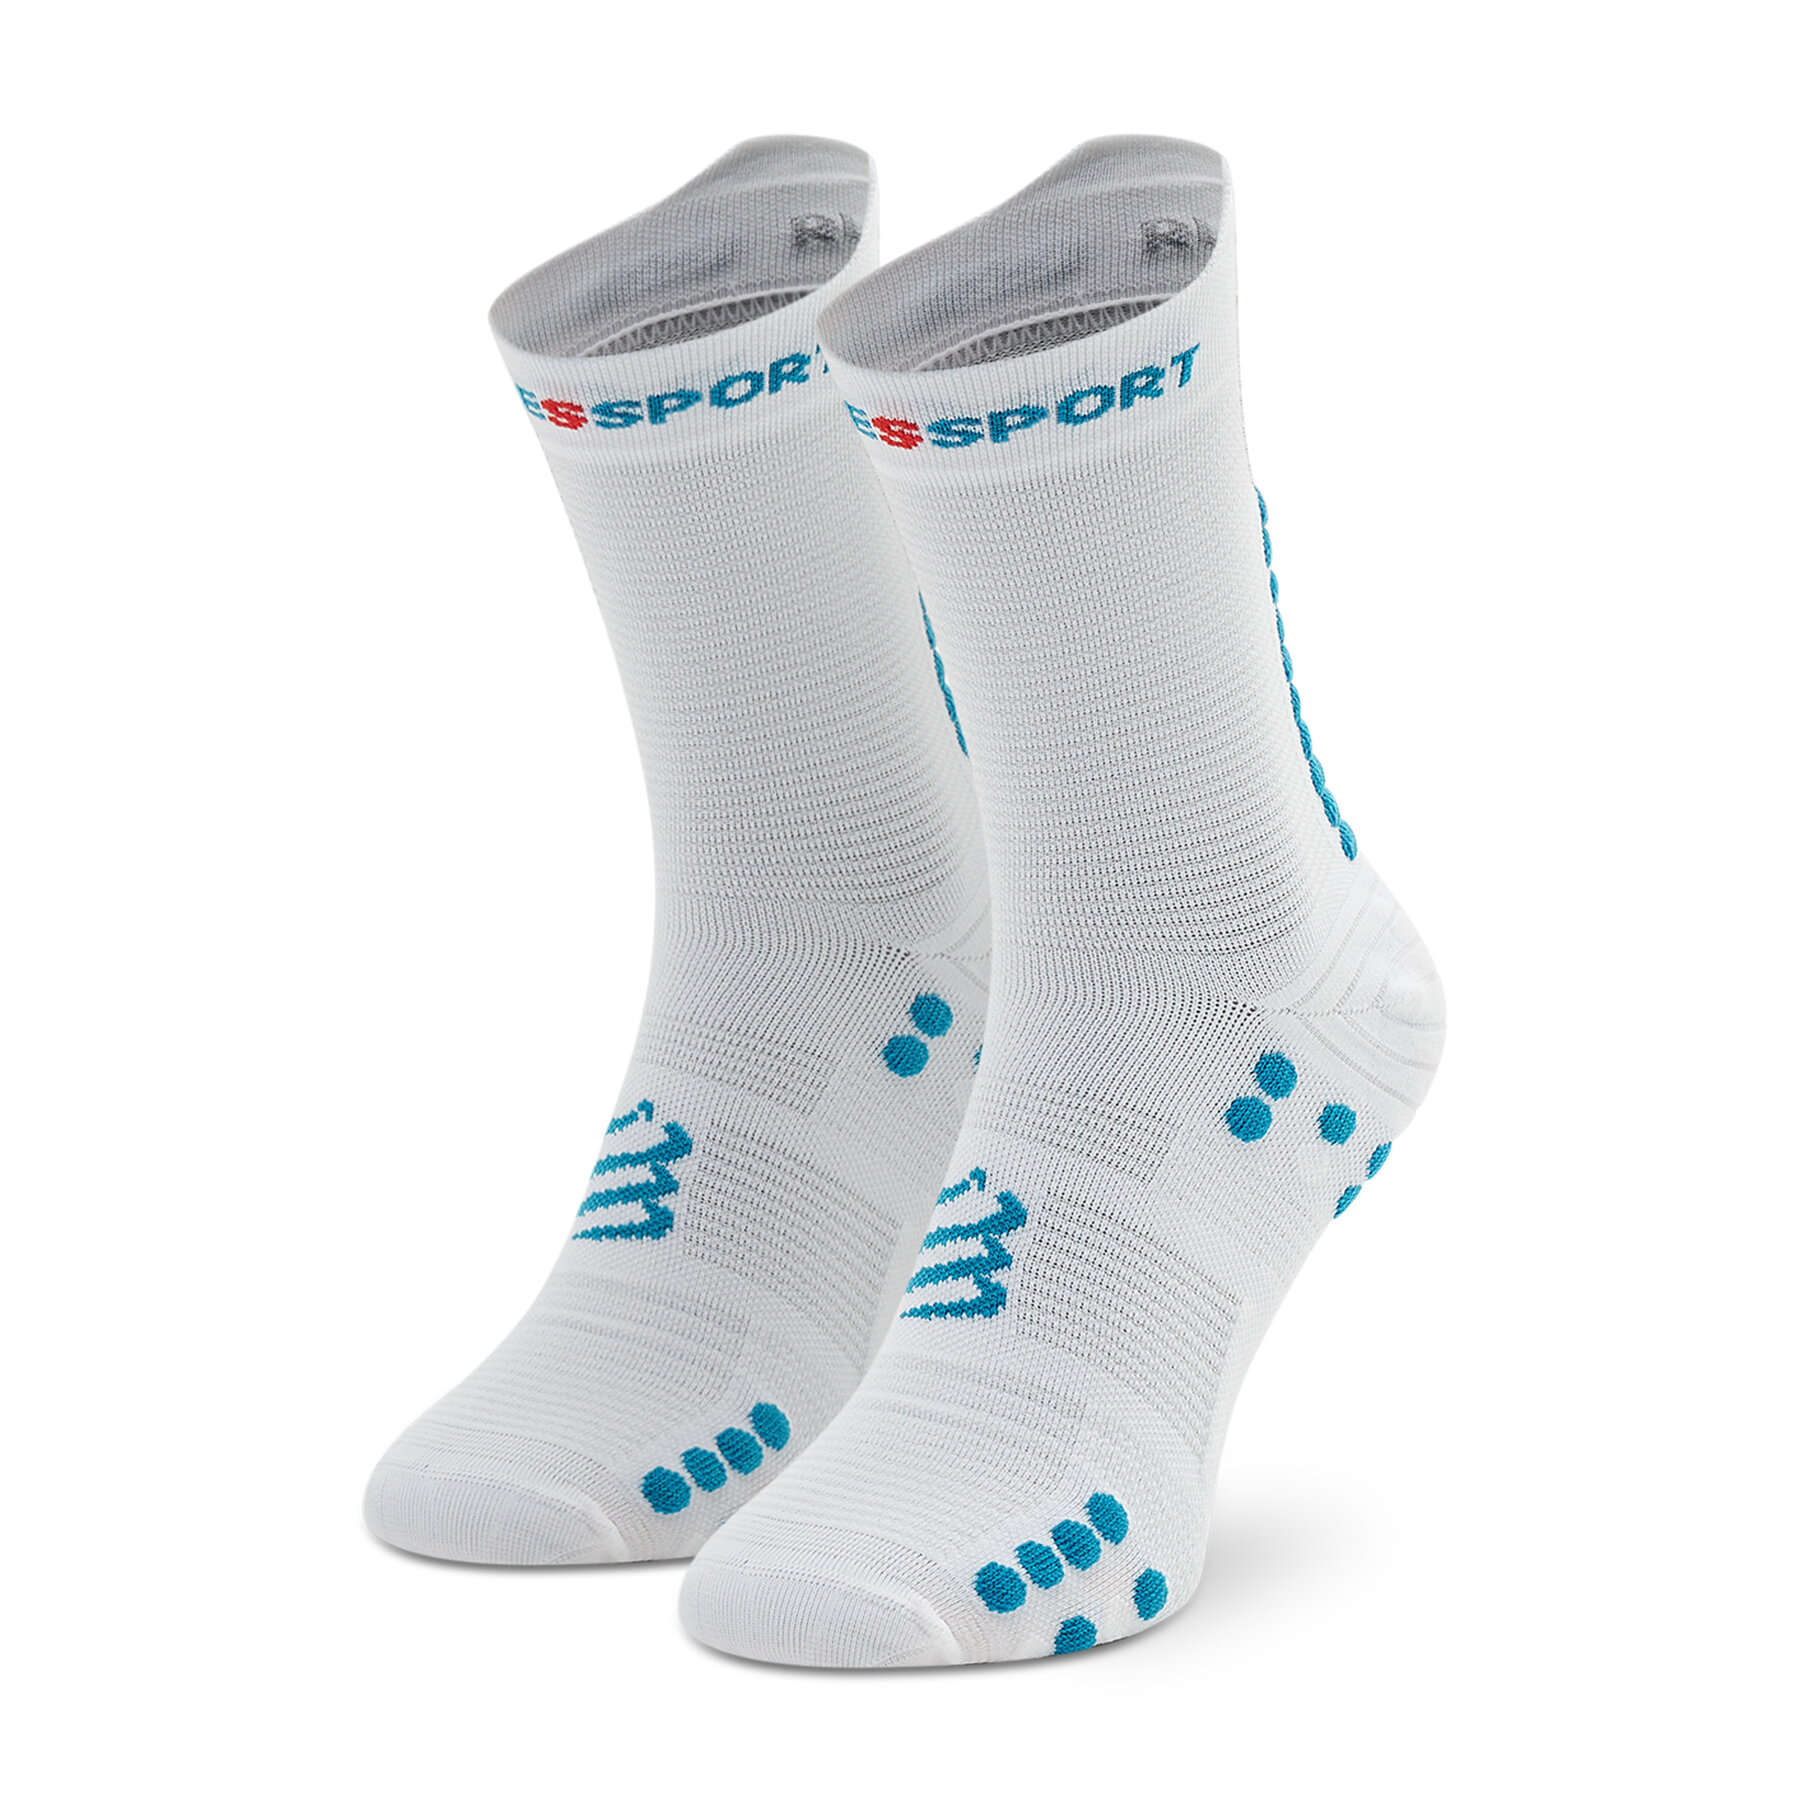 Compressport Pro Racing Socks v4.0 Run High white/fjord blue - Calcetines deportivos